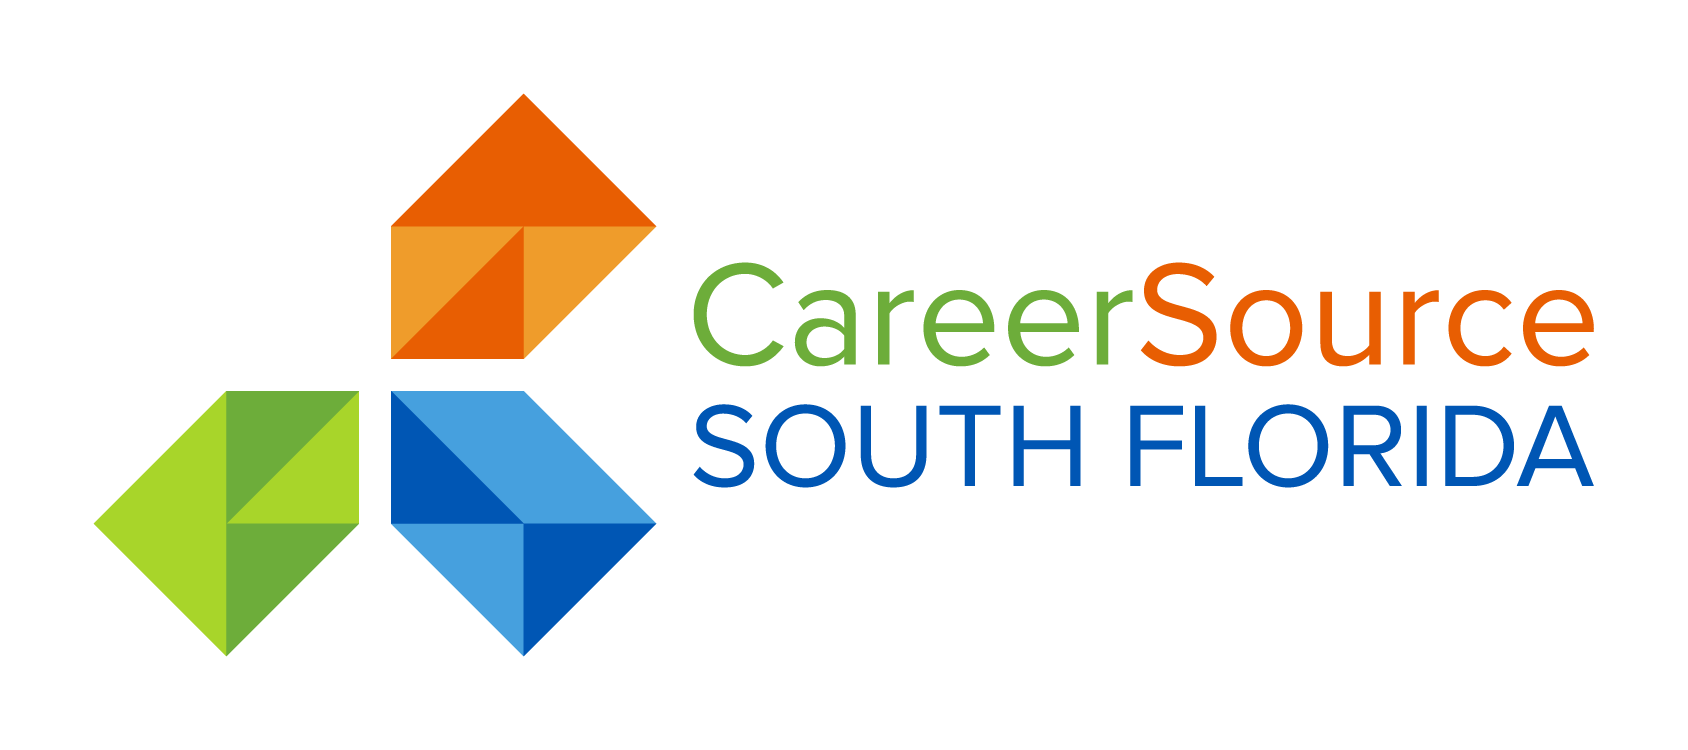 CareerSource South Florida logo